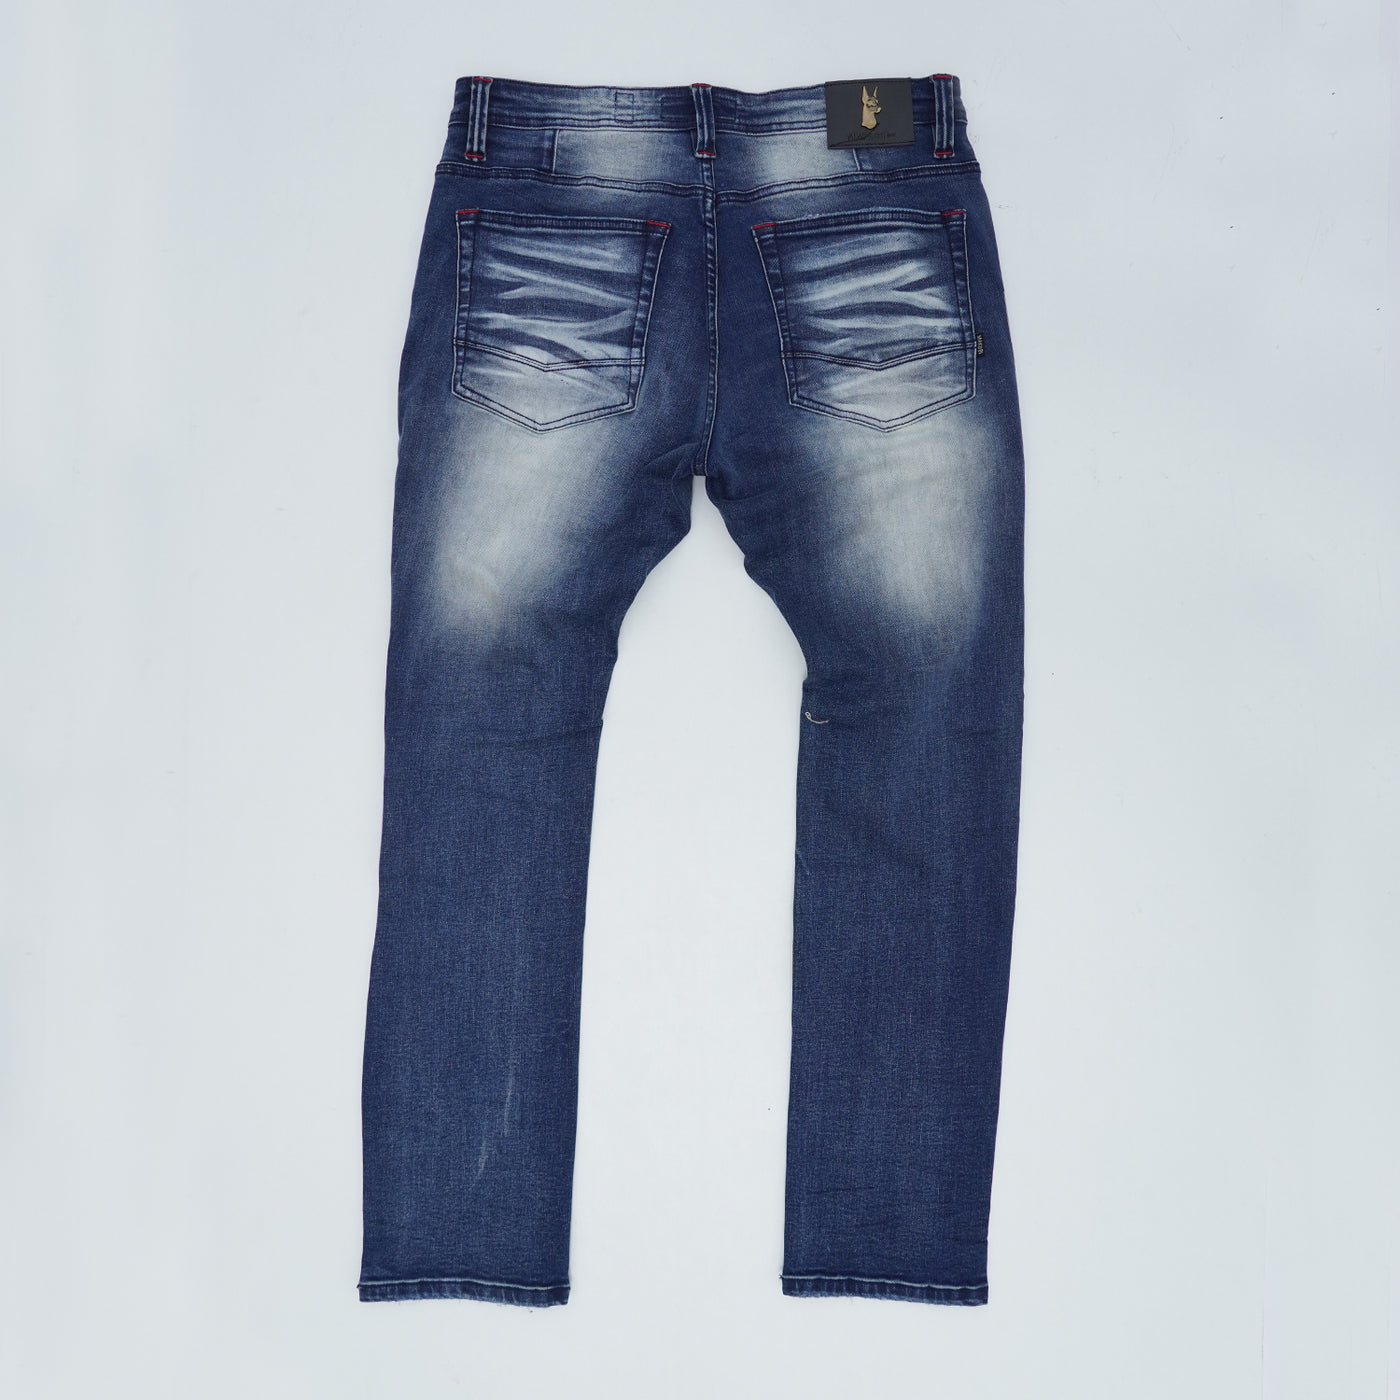 M1944 Pipa Shredded Jeans - Dark wash